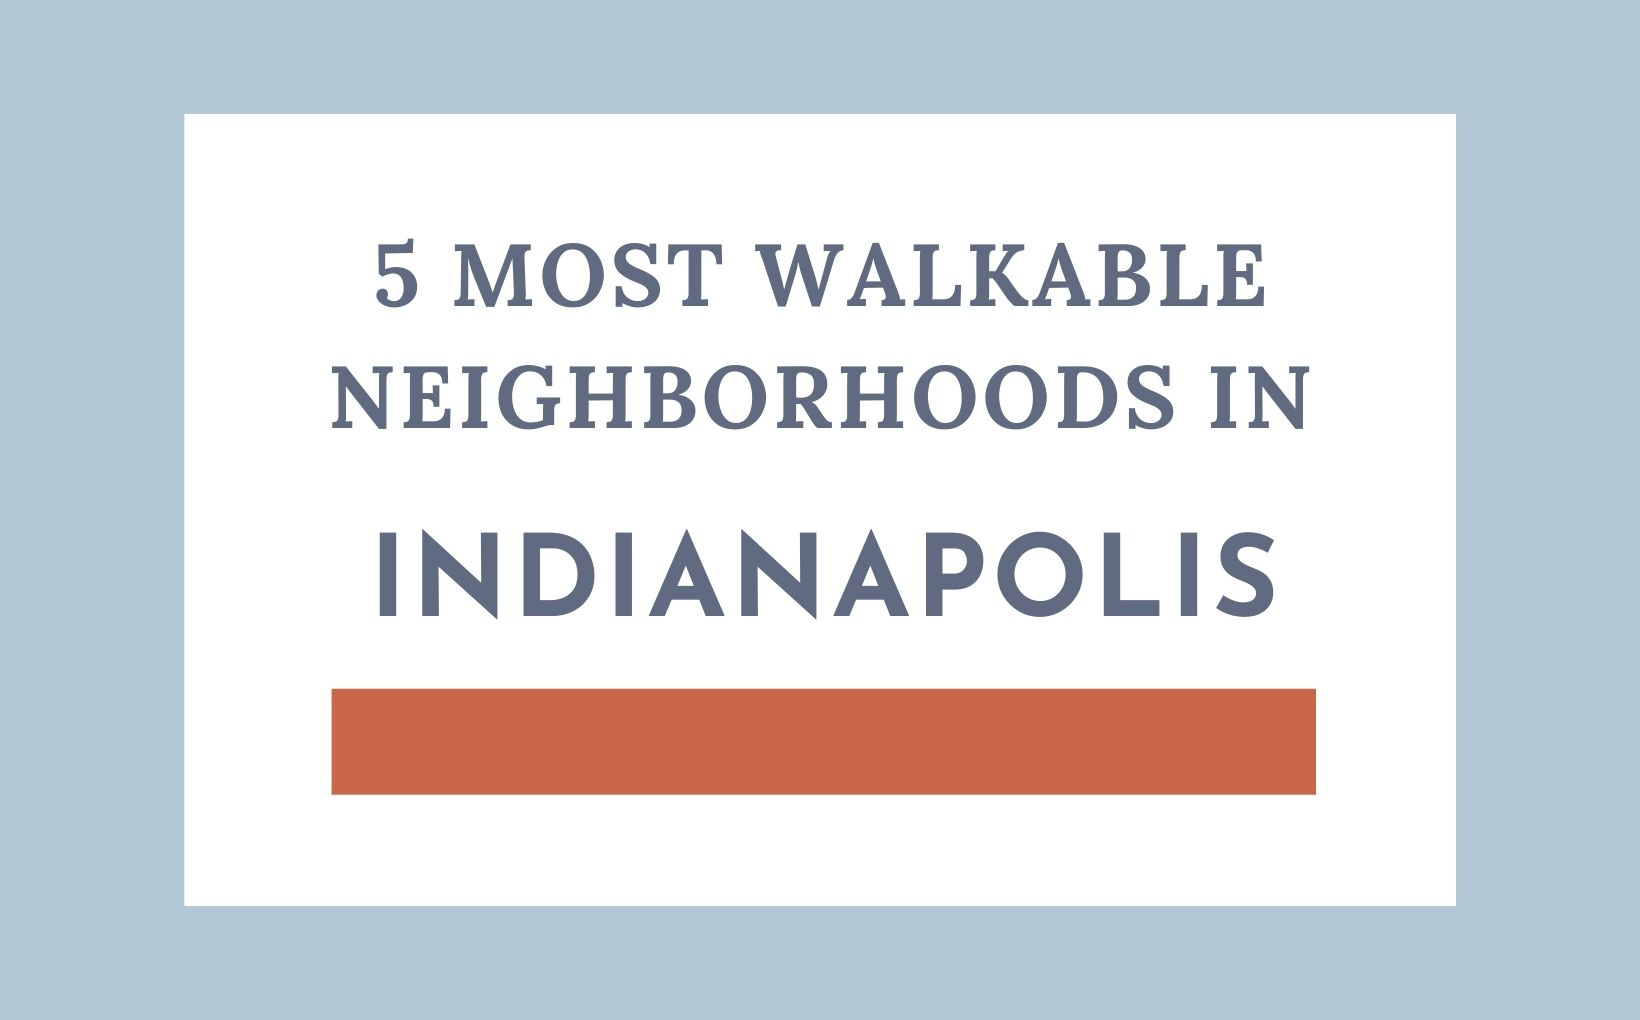 5 Most Walkable Neighborhoods in Indianapolis feature image